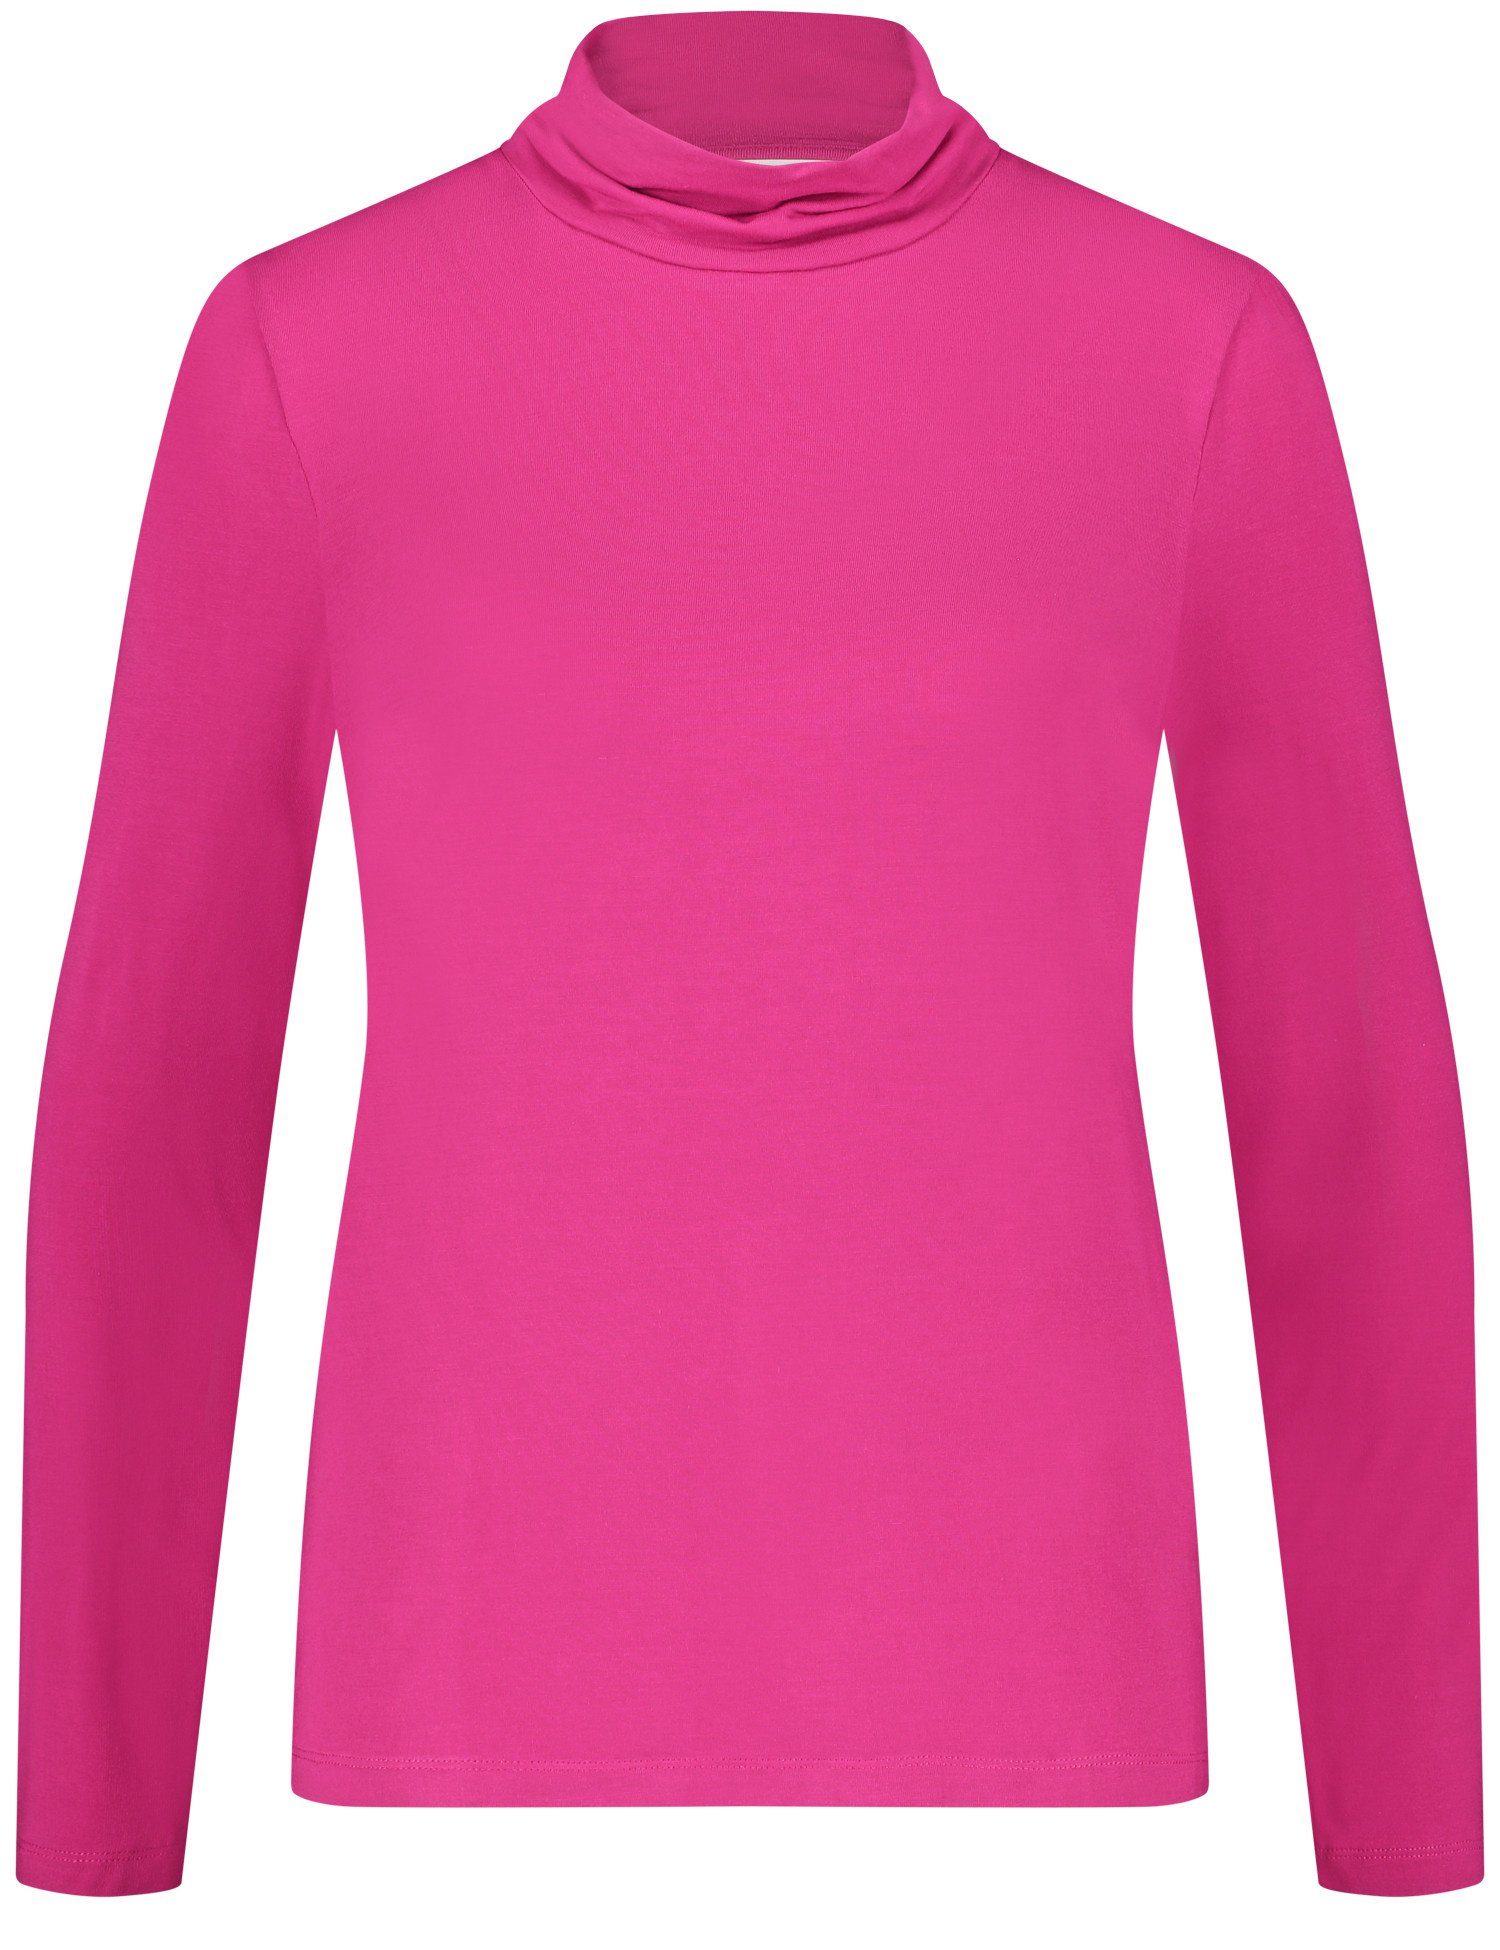 GERRY WEBER Longsleeve Langarmshirt Mit Faltenturtle hot pink